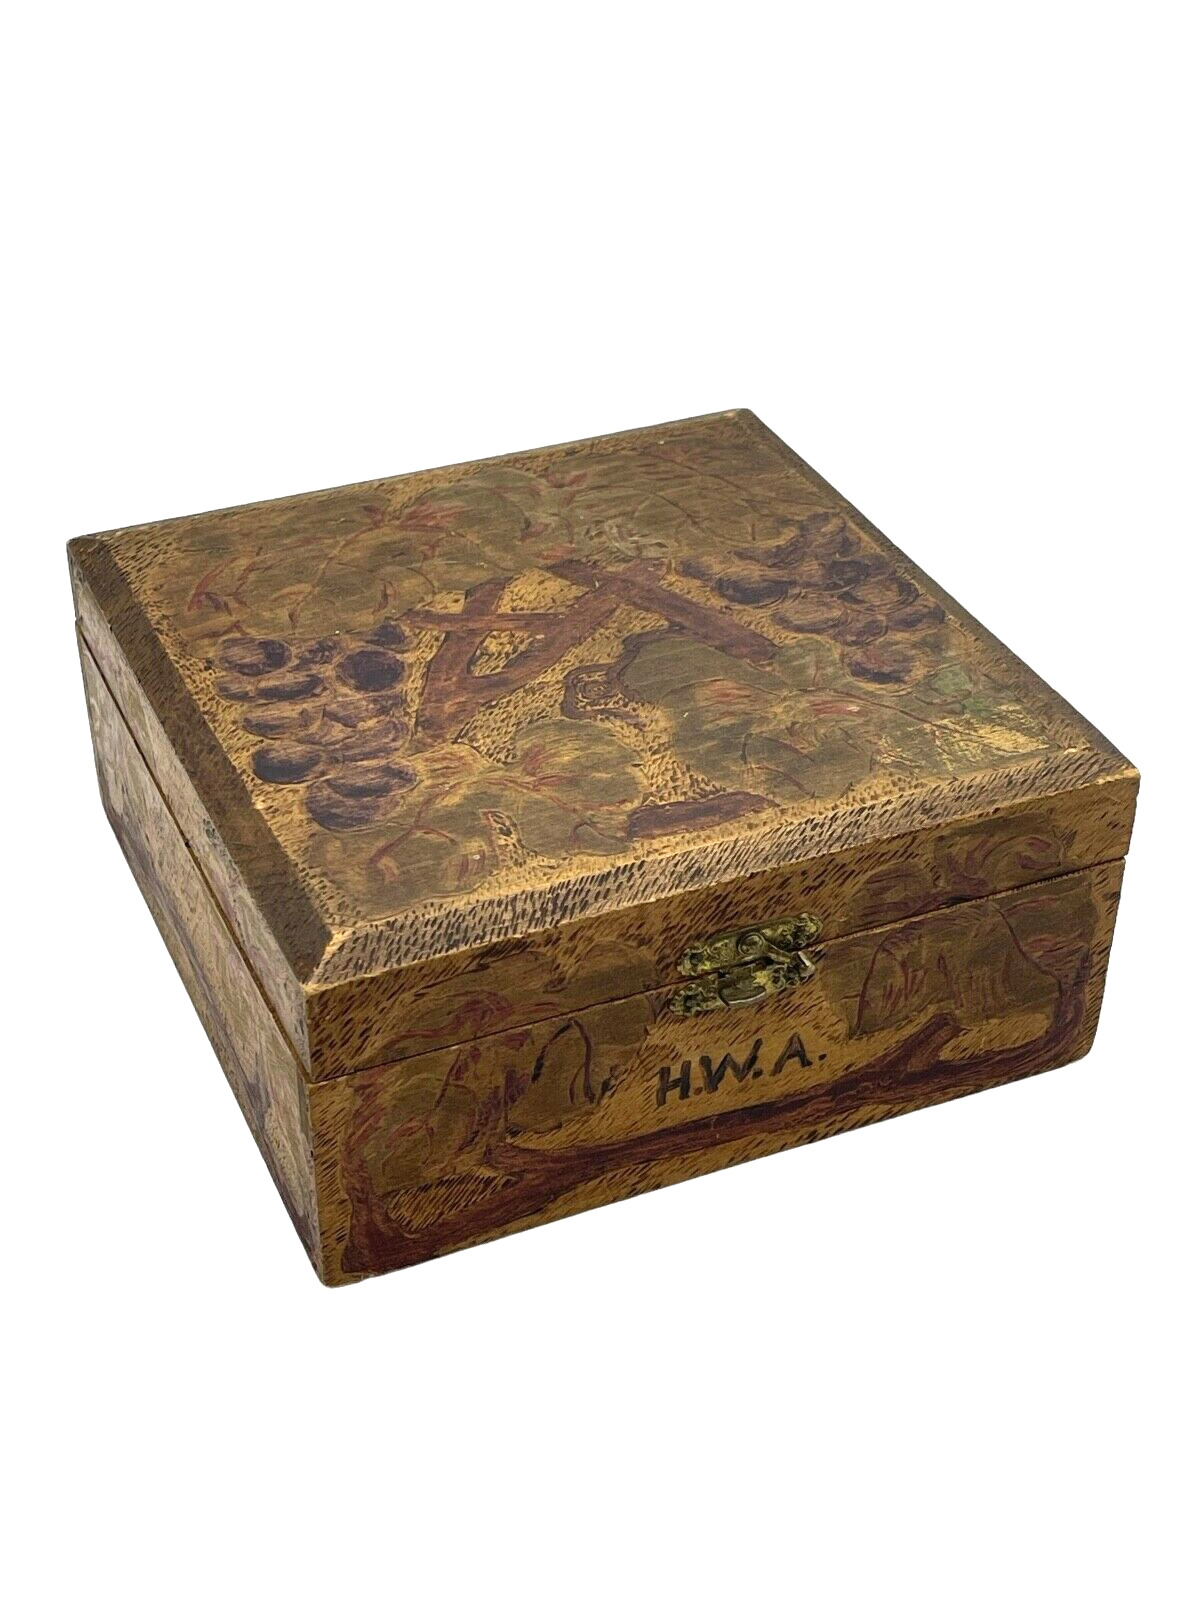 Antique Golde Pyro Art Wood Pyrography Grapevine Box Art Nouveau Flemish Art HWA